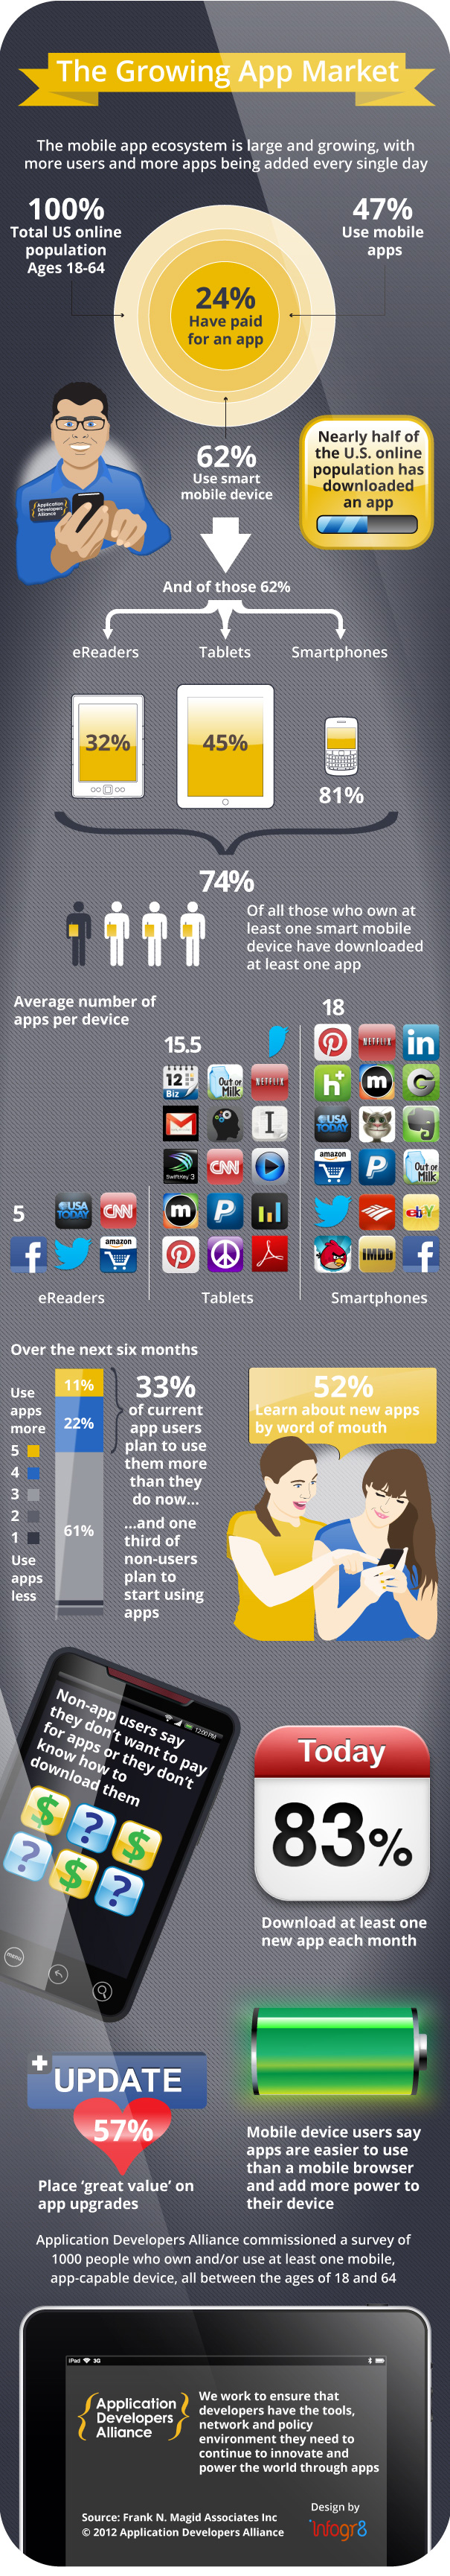 The growing app market